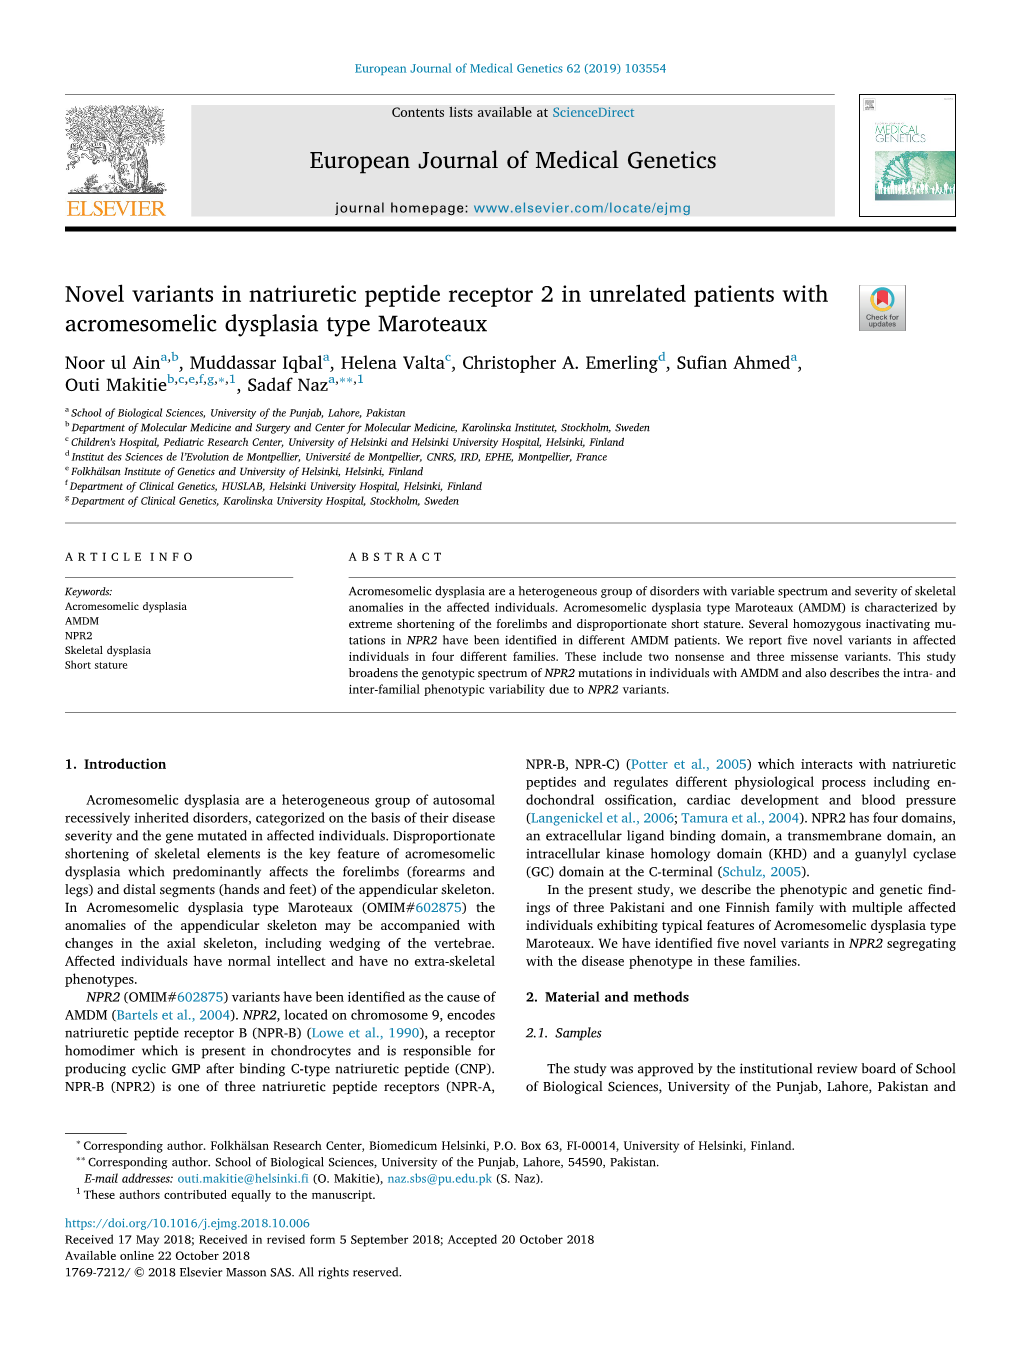 Novel Variants in Natriuretic Peptide Receptor 2 in Unrelated Patients With